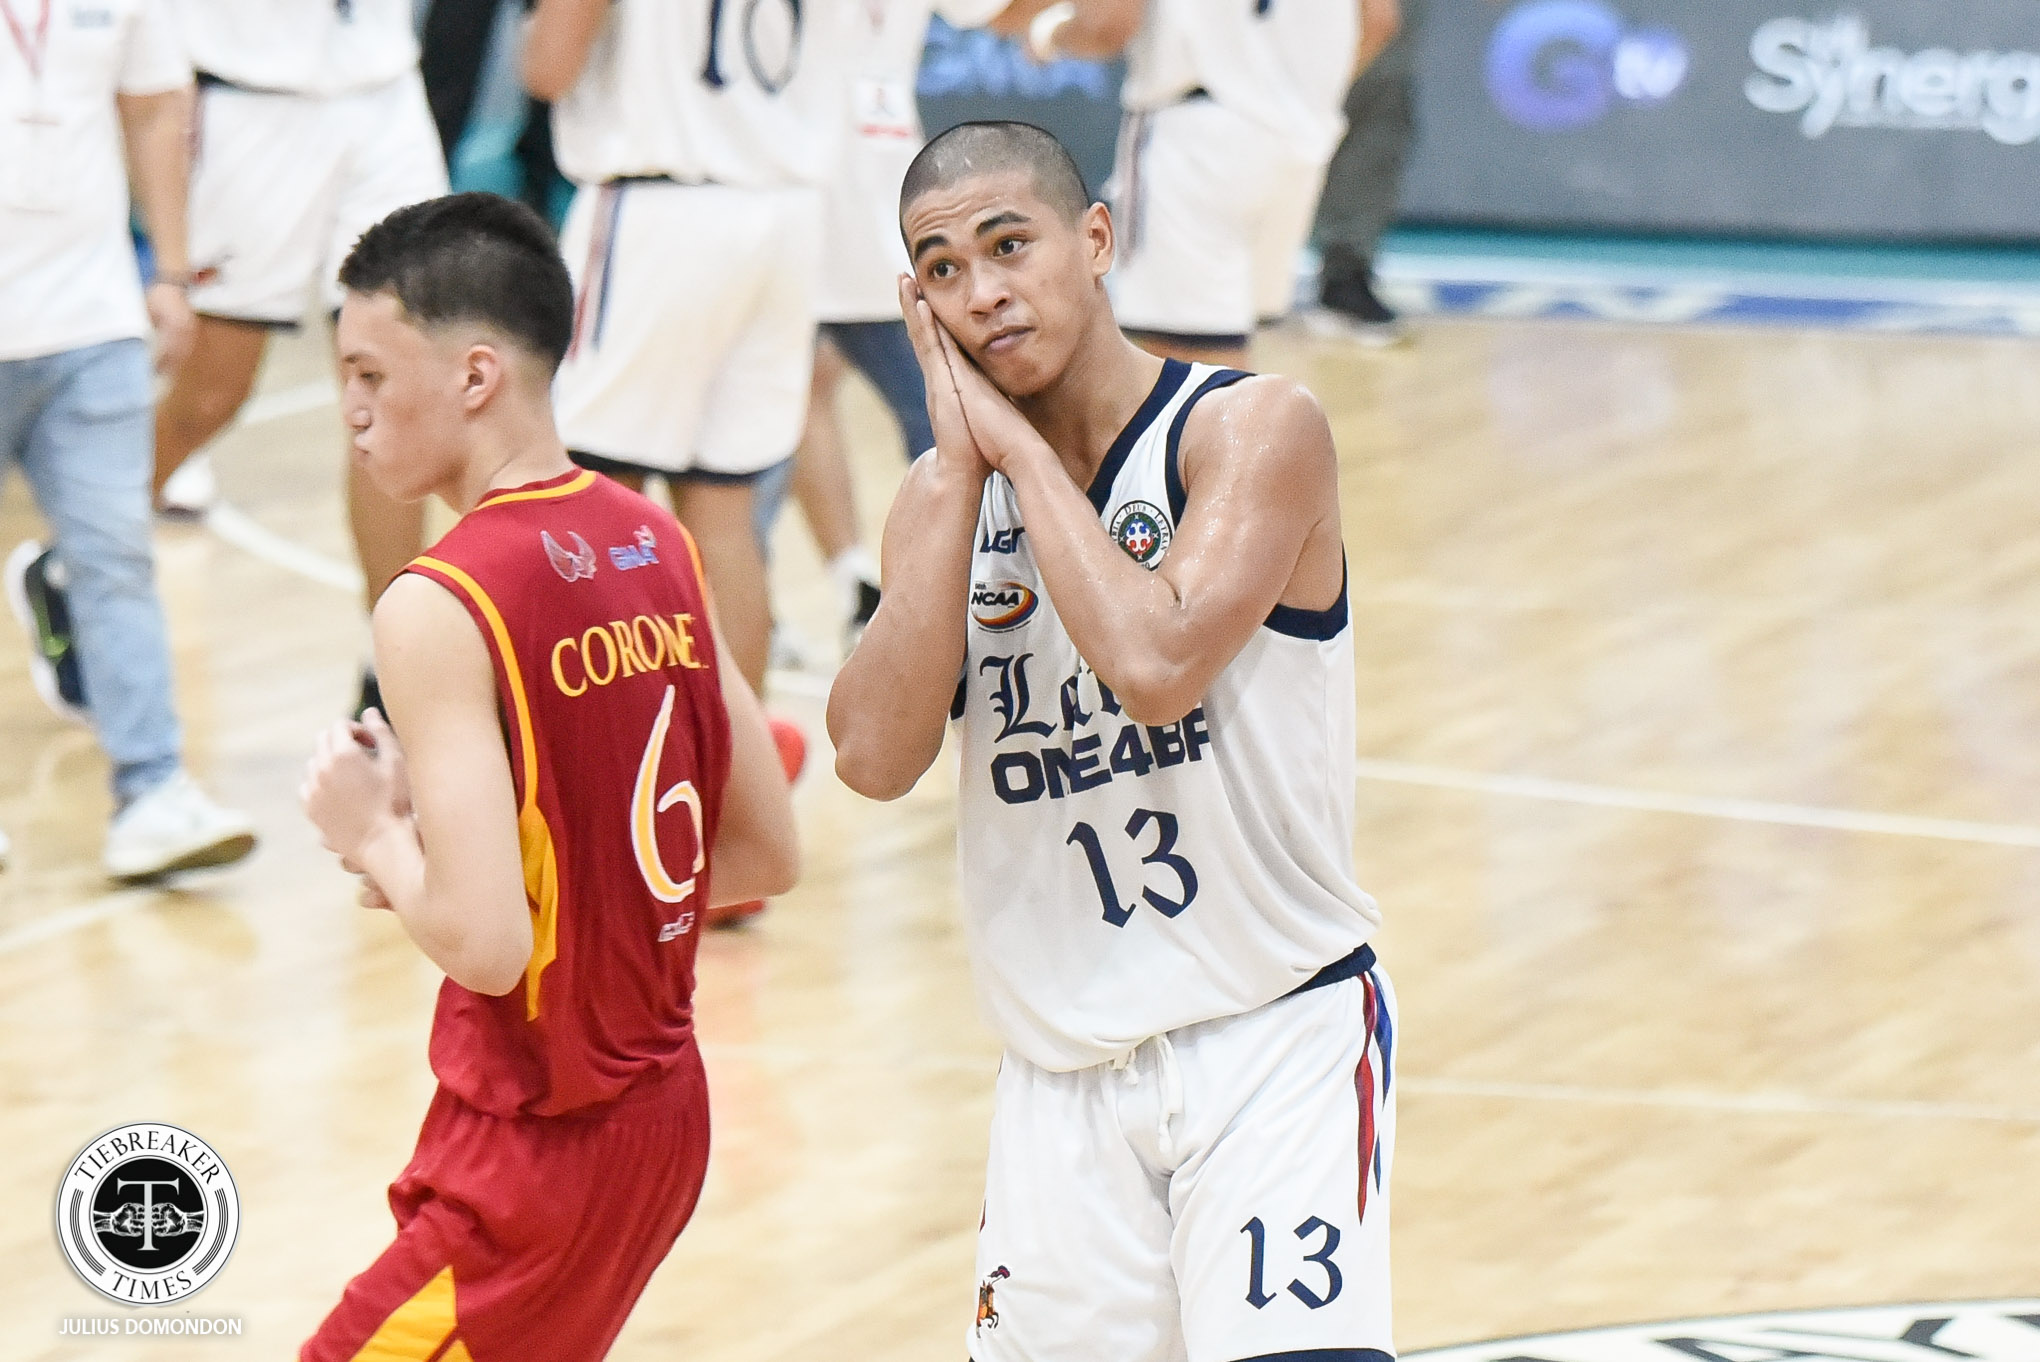 NCAA-98-Mapua-vs-Letran-Jonathan-Manalili Rensy Bajar laments lost rebuilding season for Letran Basketball CSJL NCAA News  - philippine sports news